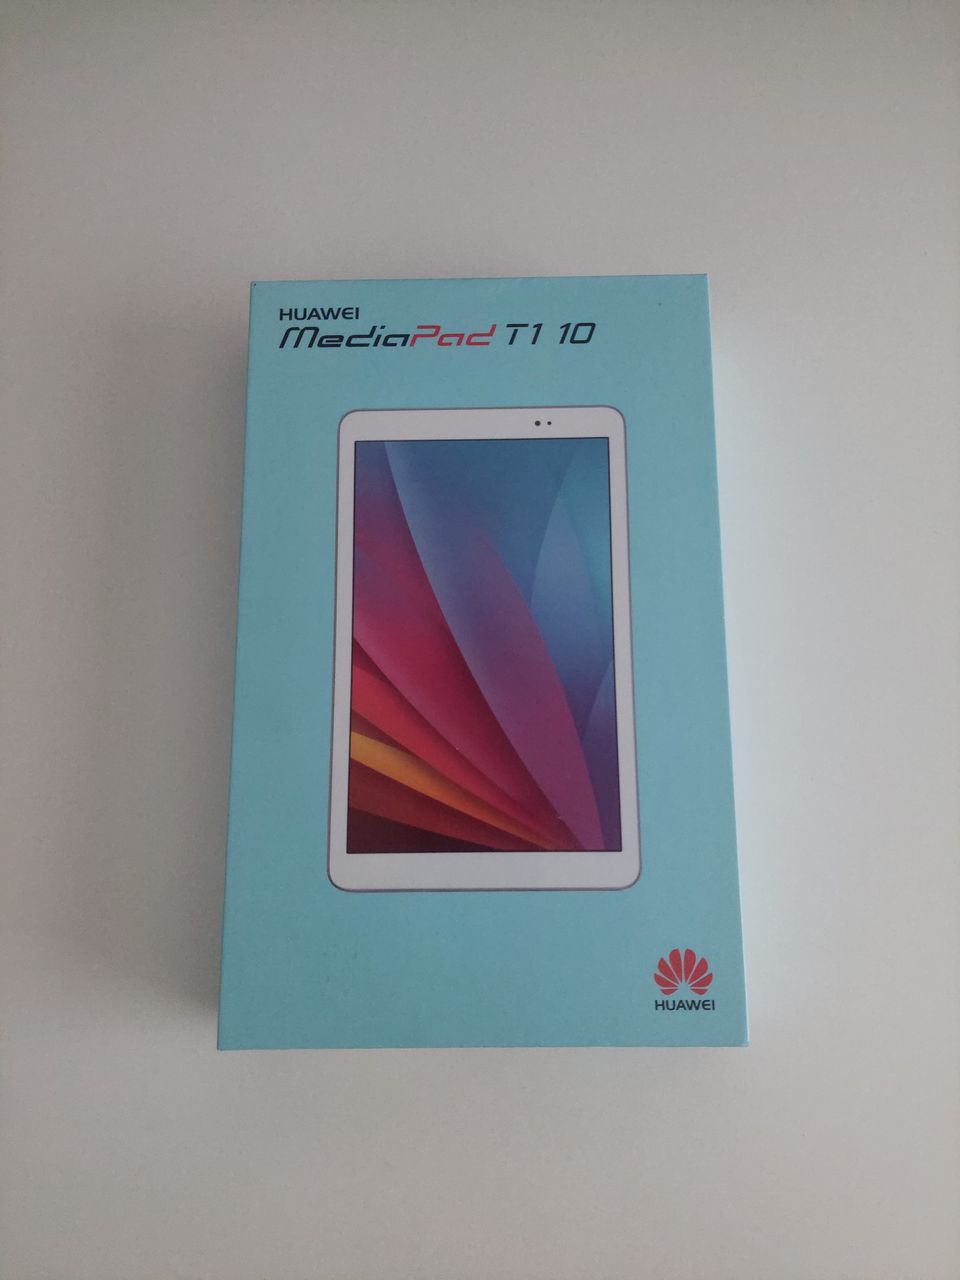 Huawei Mediapad T1 10 tabletti